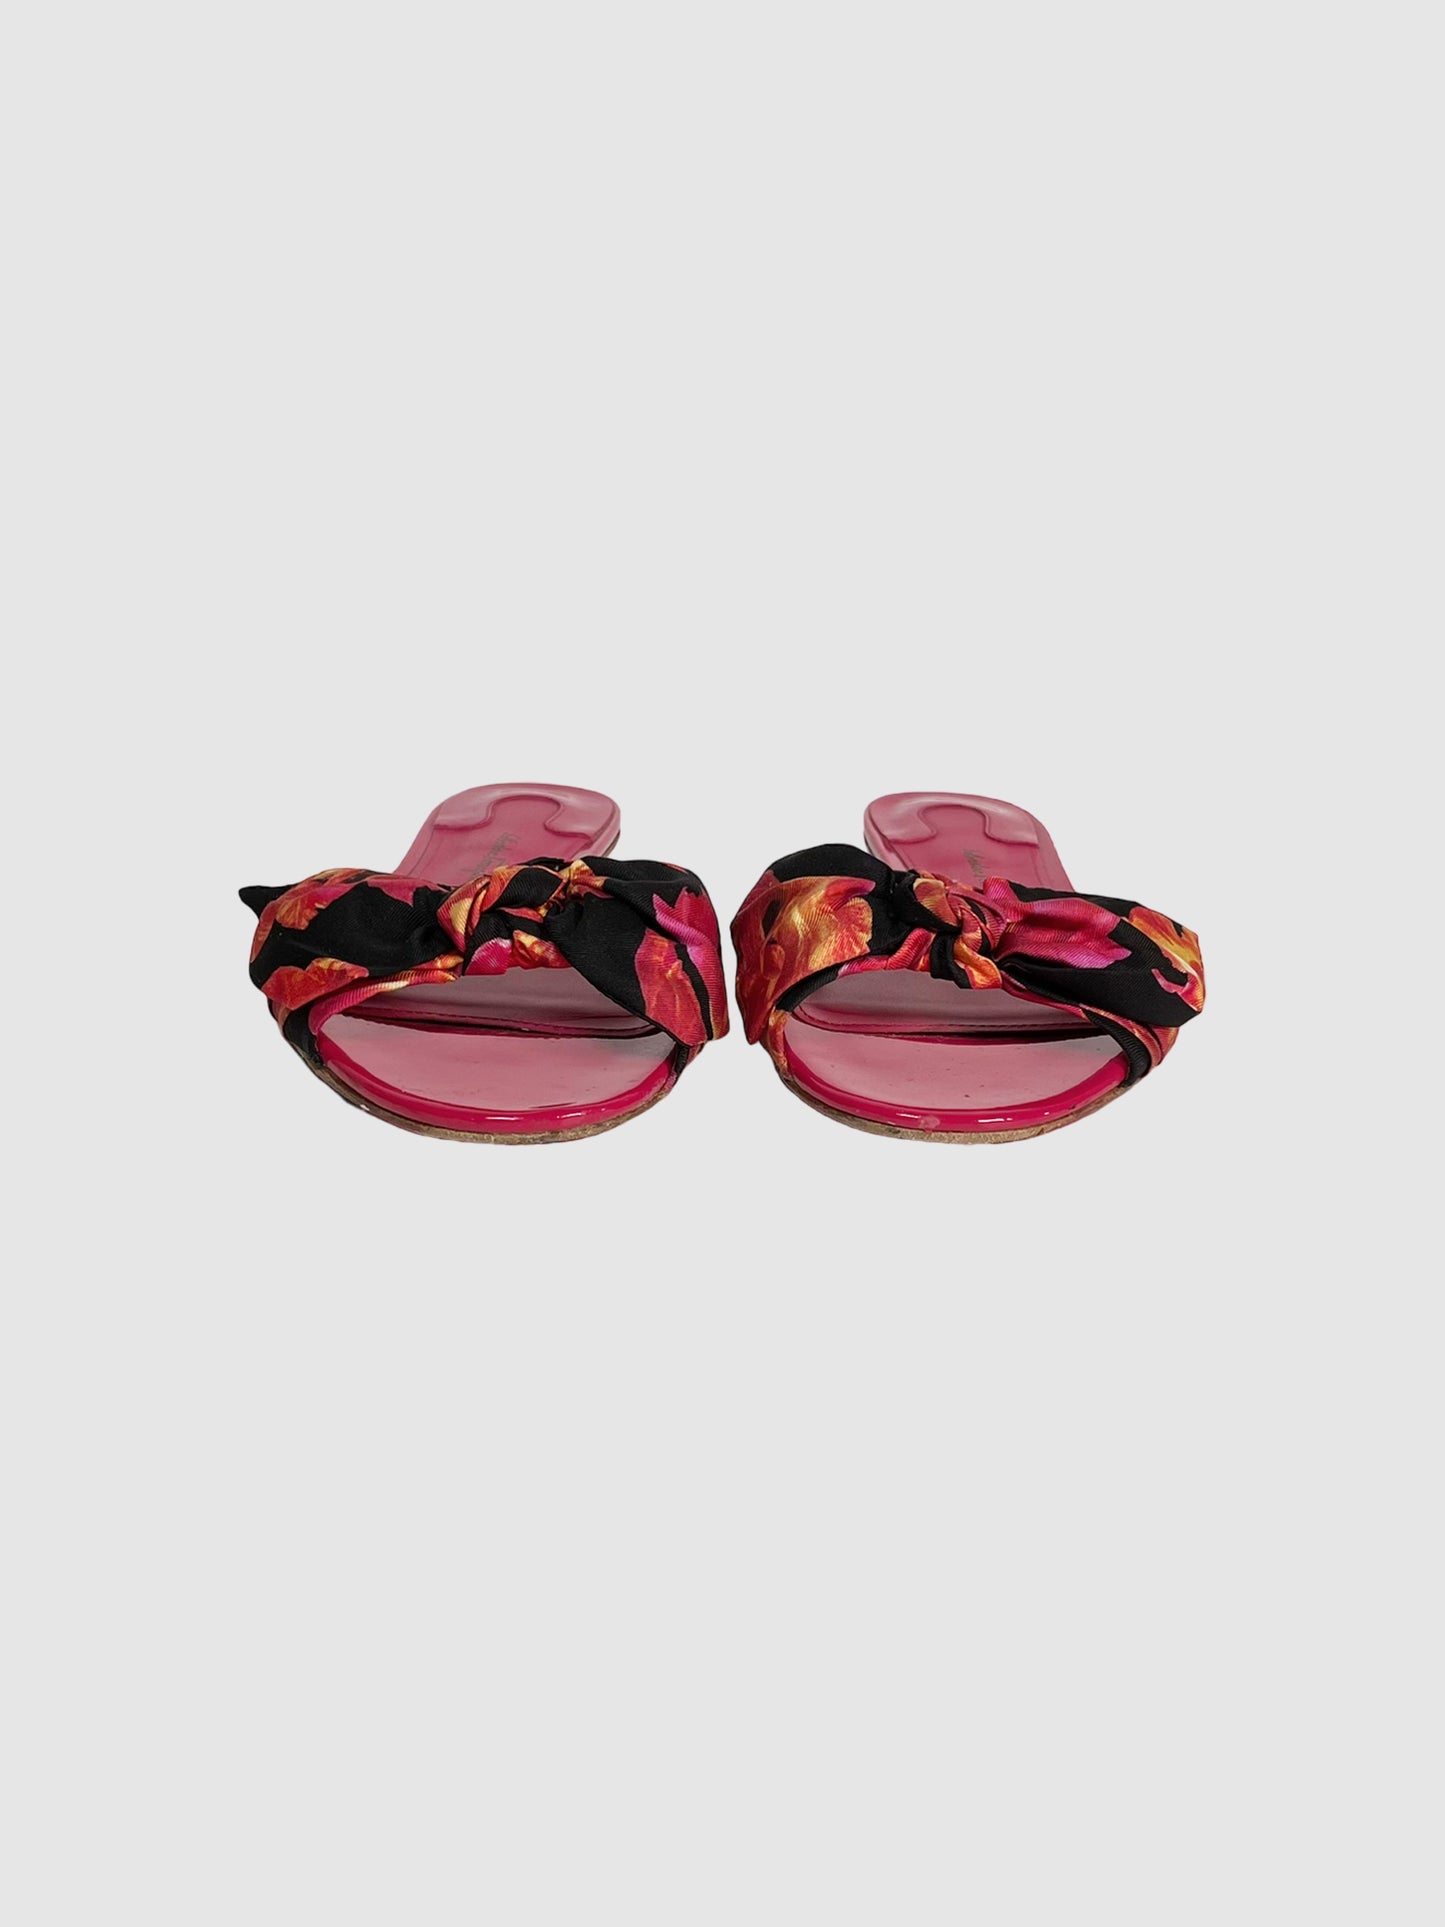 Salvatore Ferragamo 'Chianni' Floral Print Silk Slide Sandals - Size 7